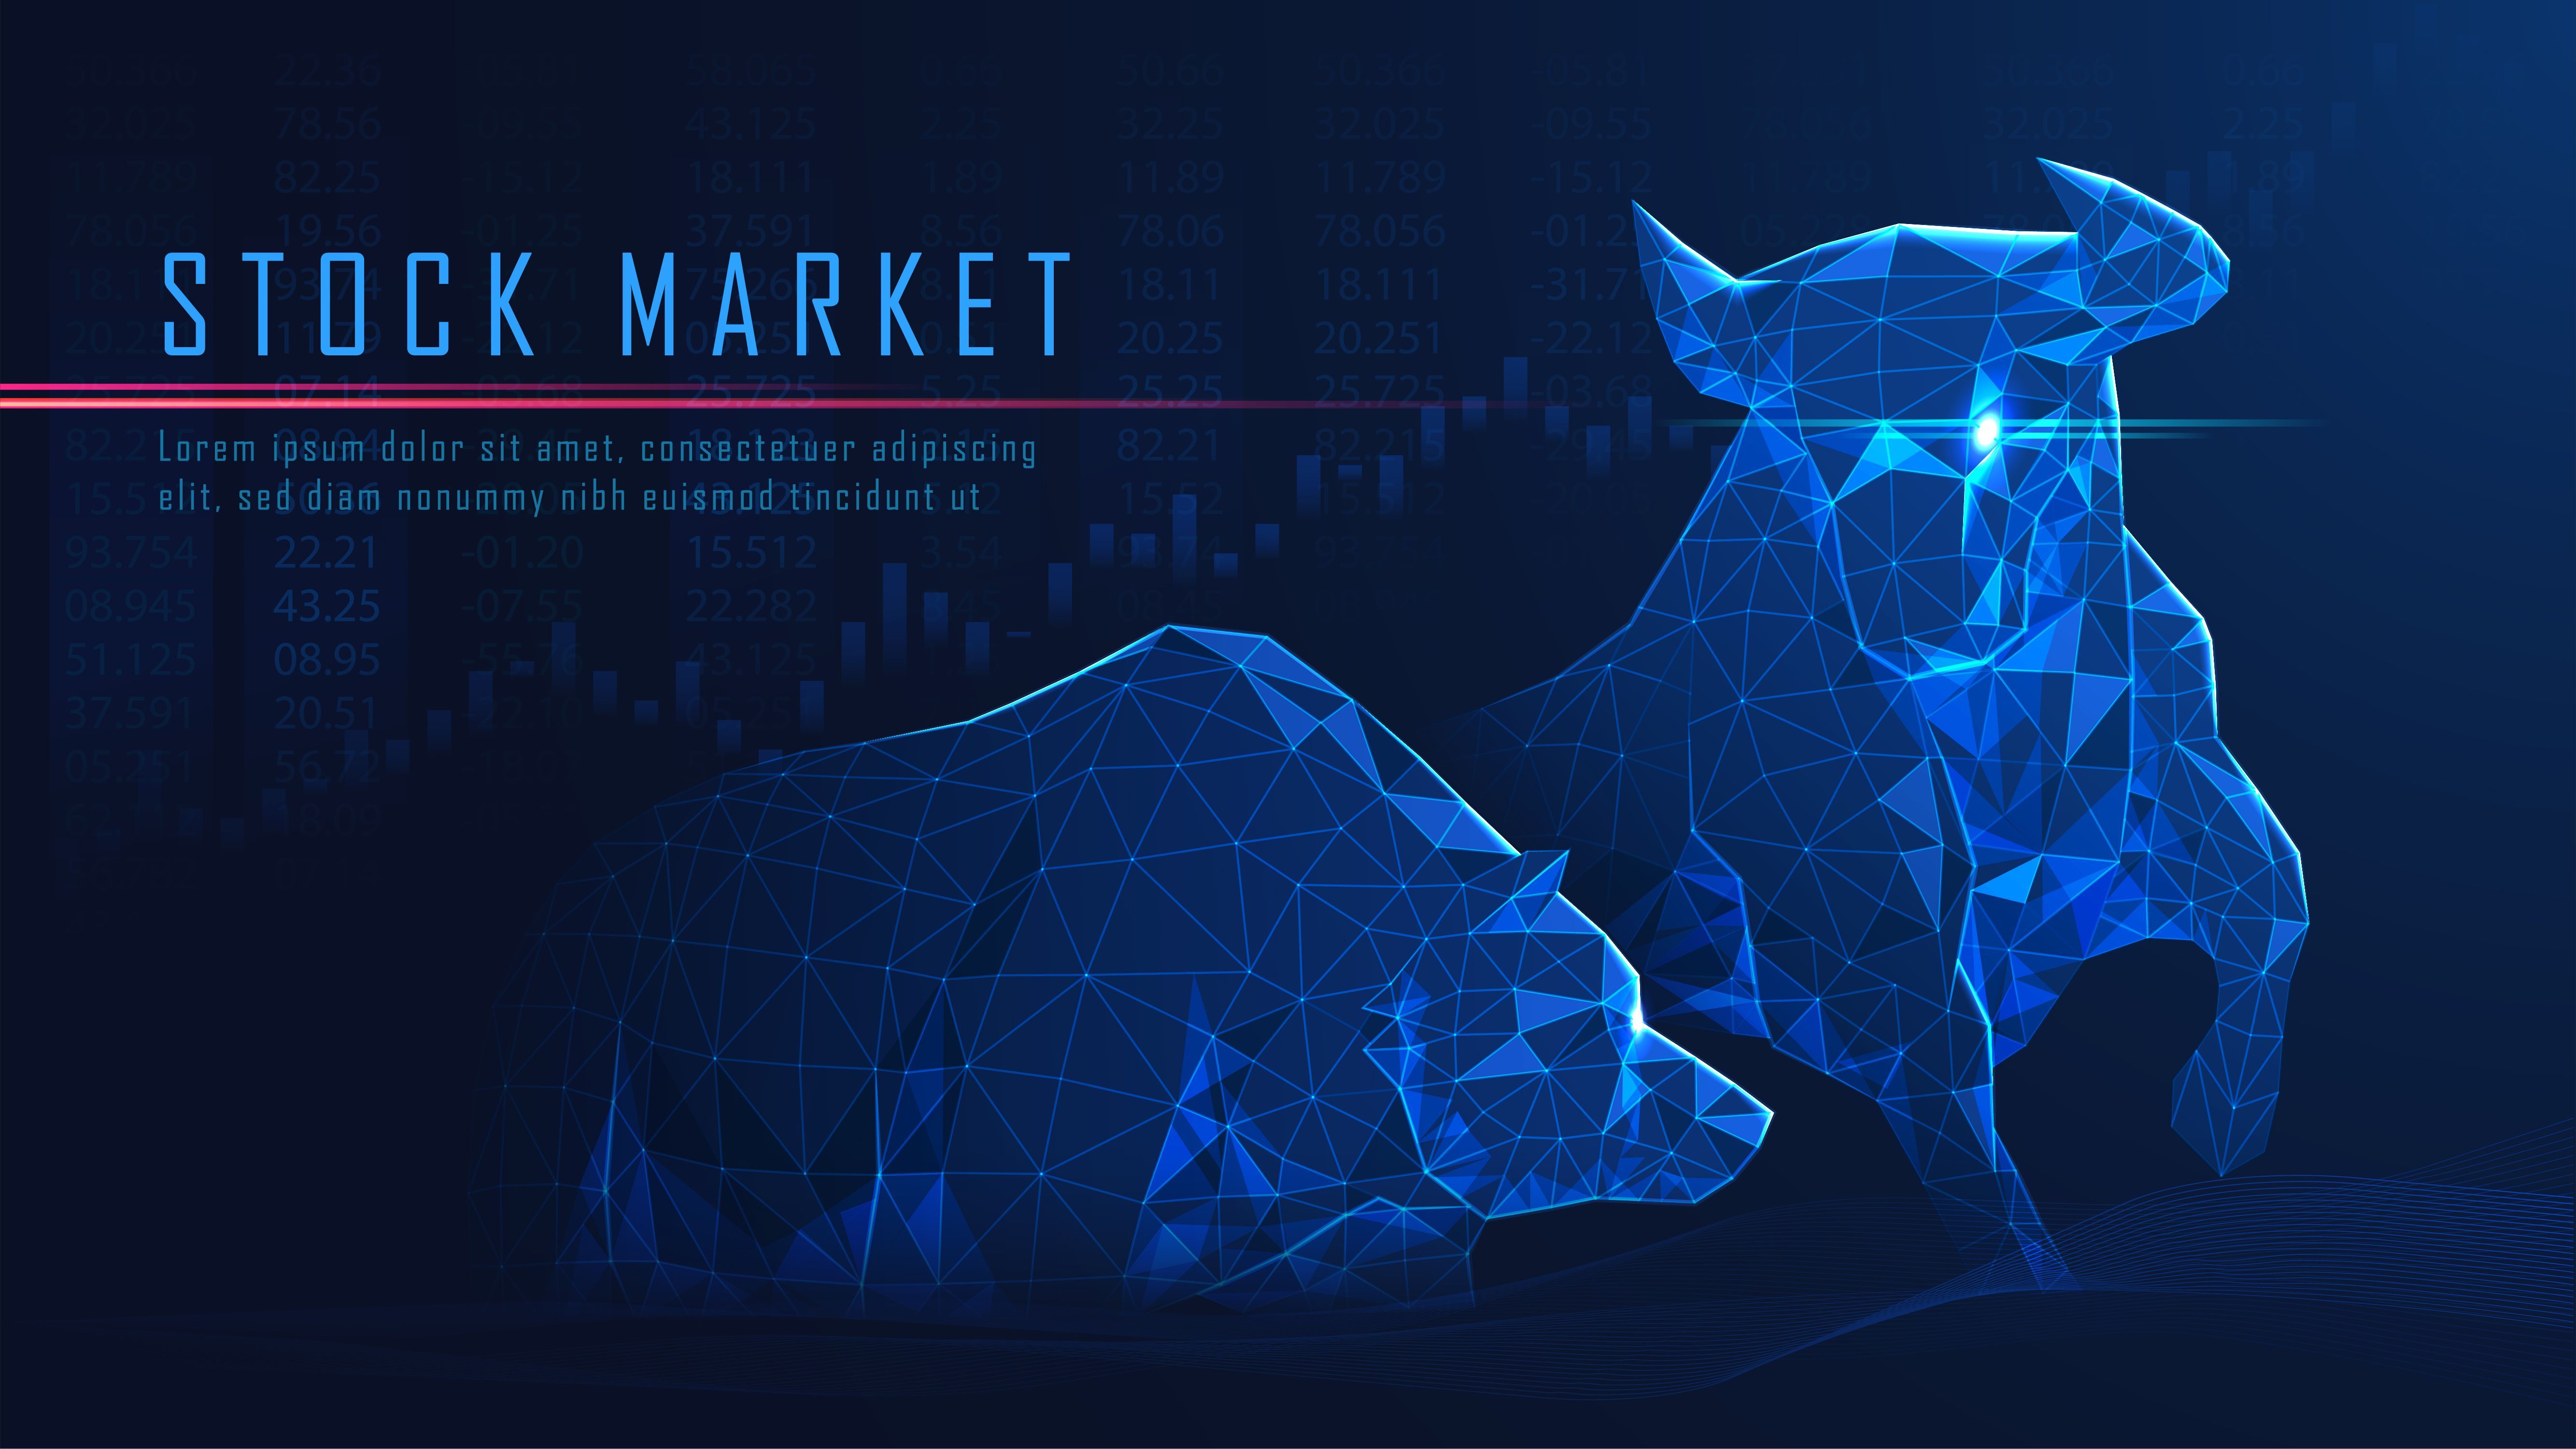 Concept Art Of Bullish Vs Bearish. Concept art, Stock market, Stock market trends